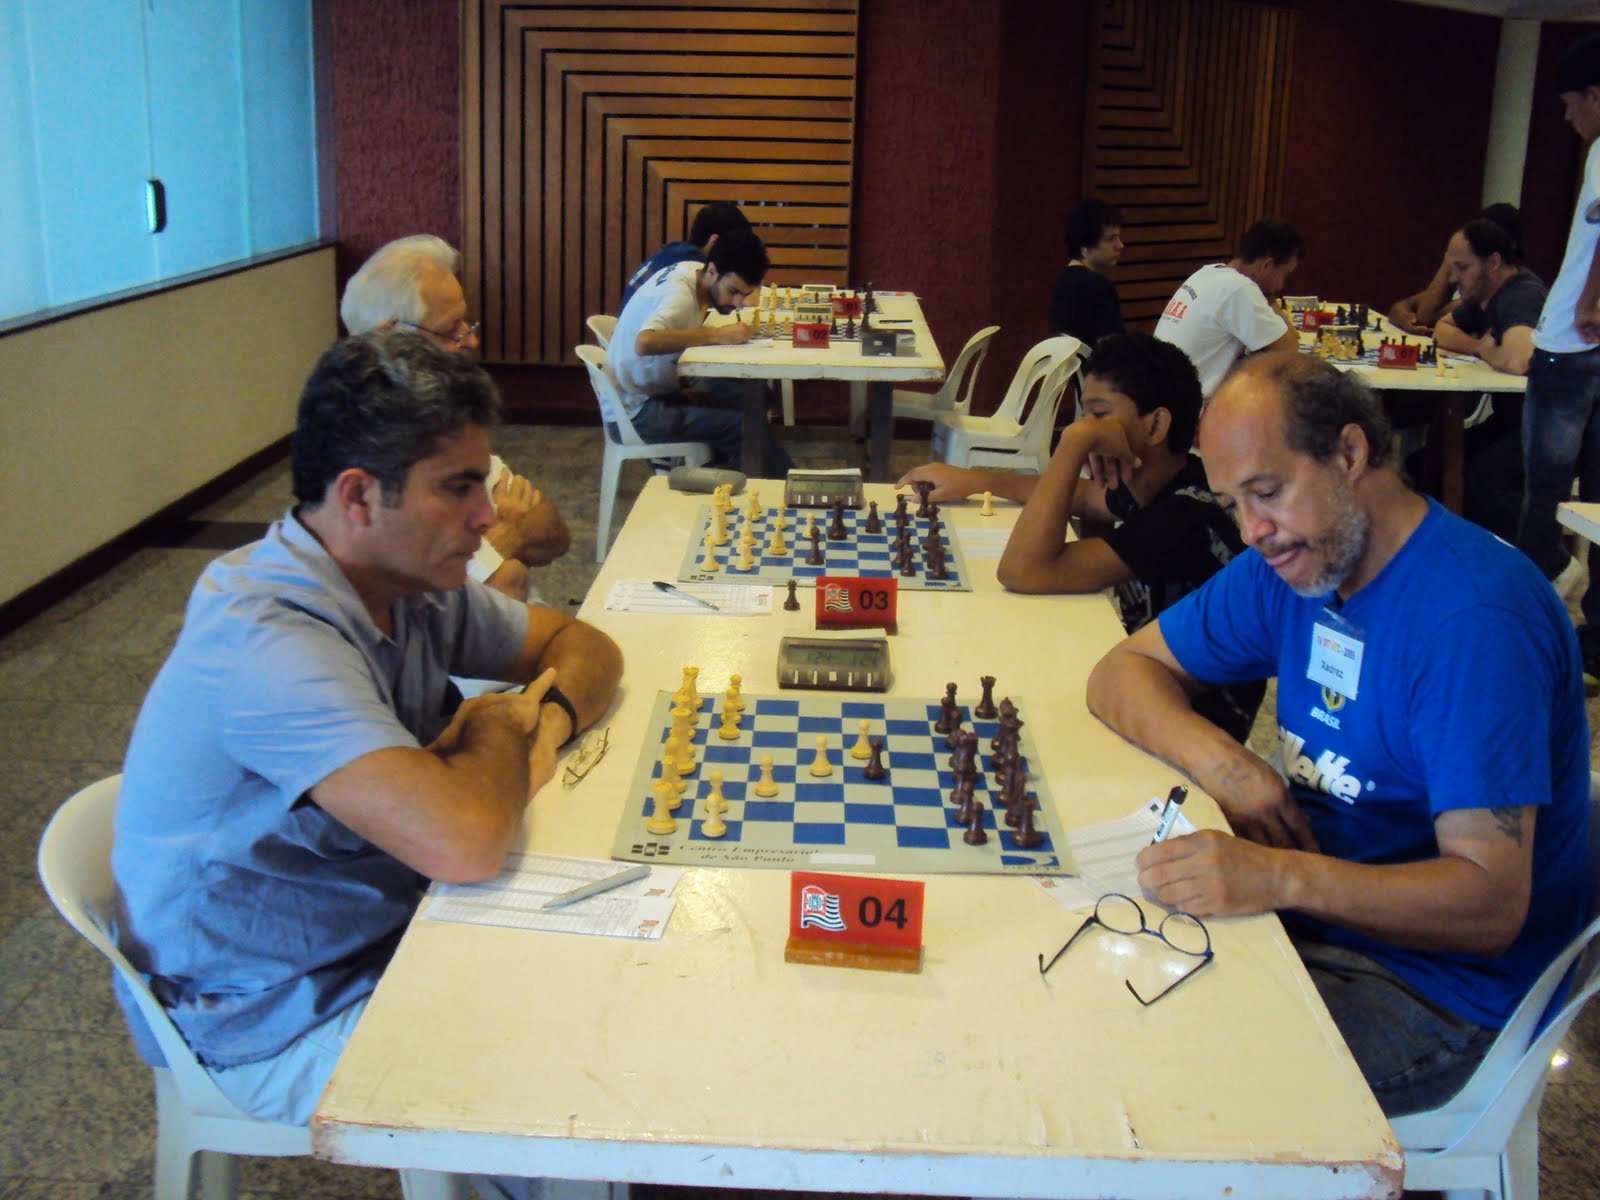 Xadrez Underground by Salama e Cirilo: Afogamento no xadrez and